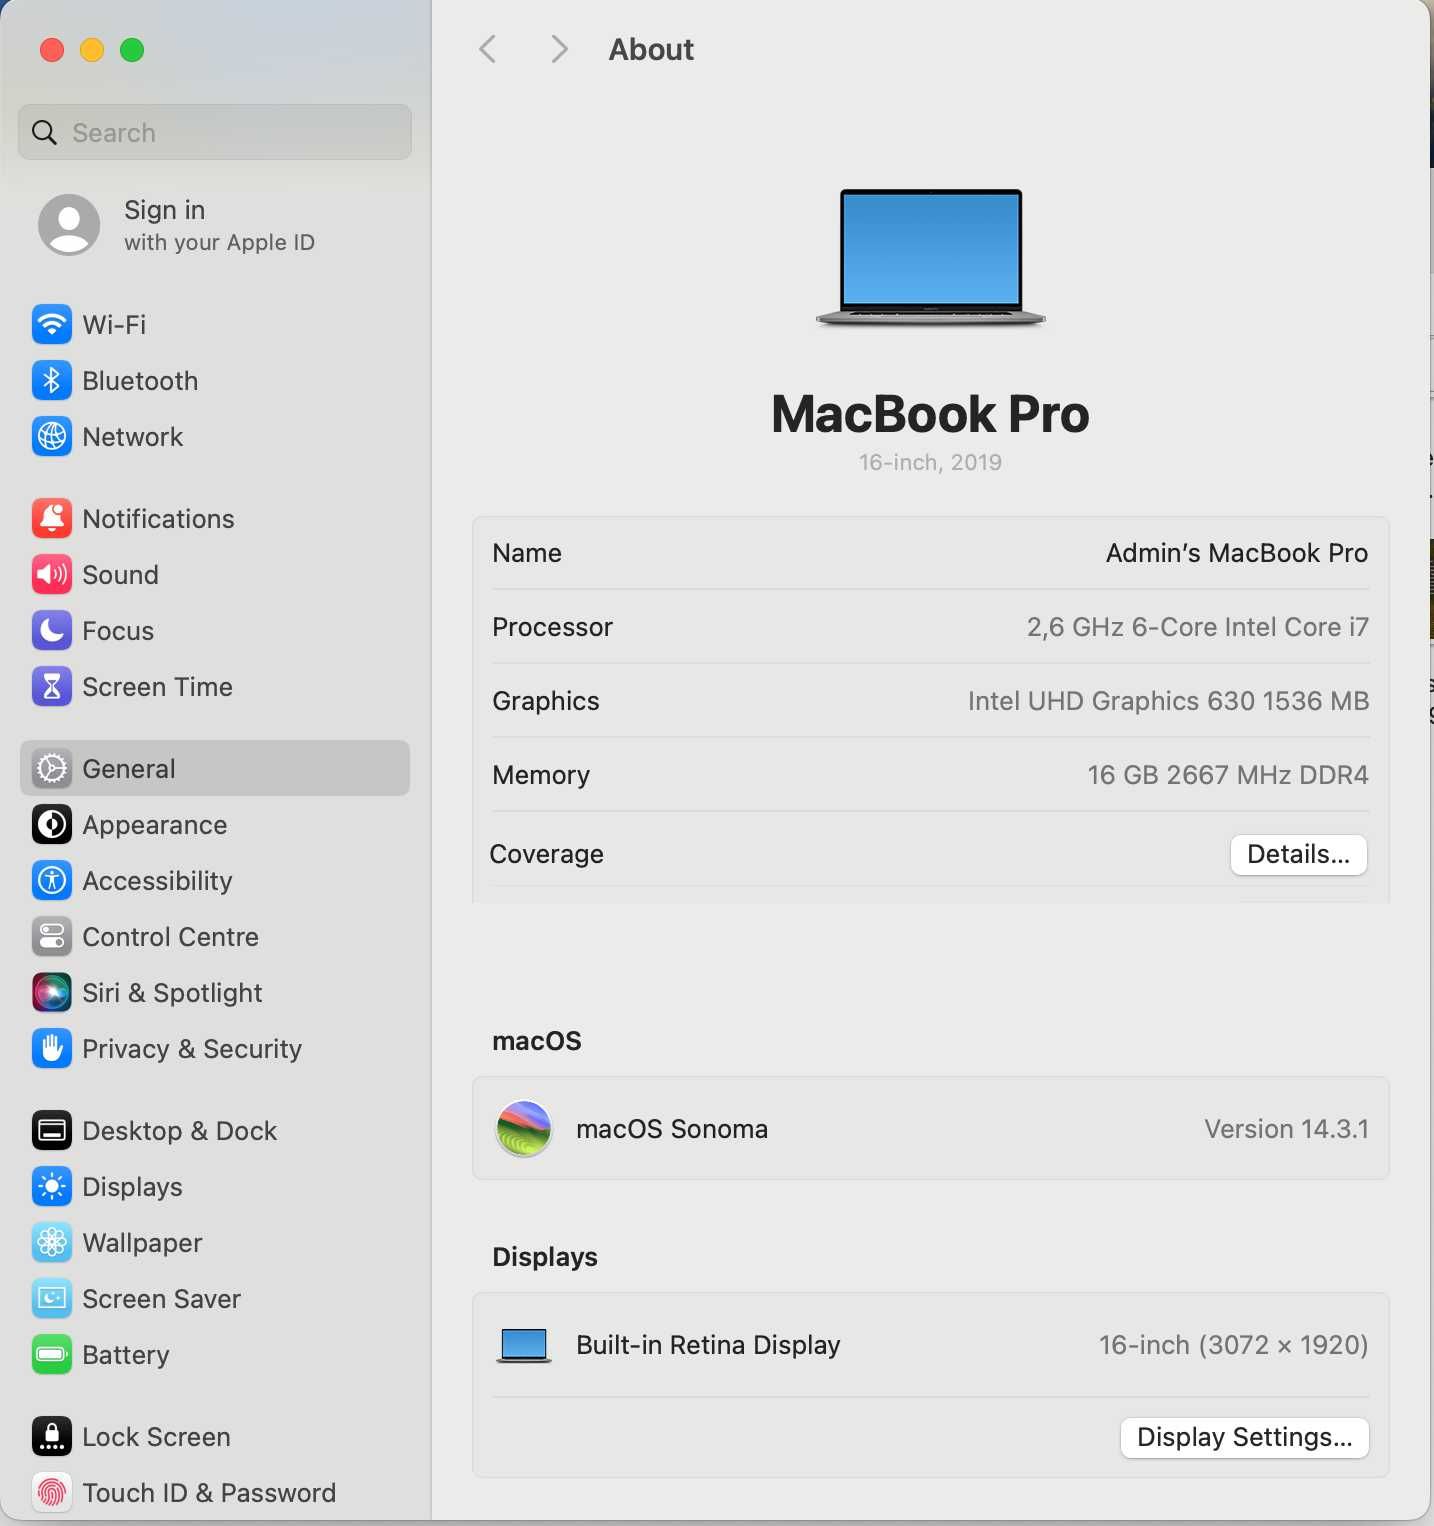 MacBook Pro 16", Model 2019 (A2141), CPU Intel i7, 16GB RAM, 512GB SSD